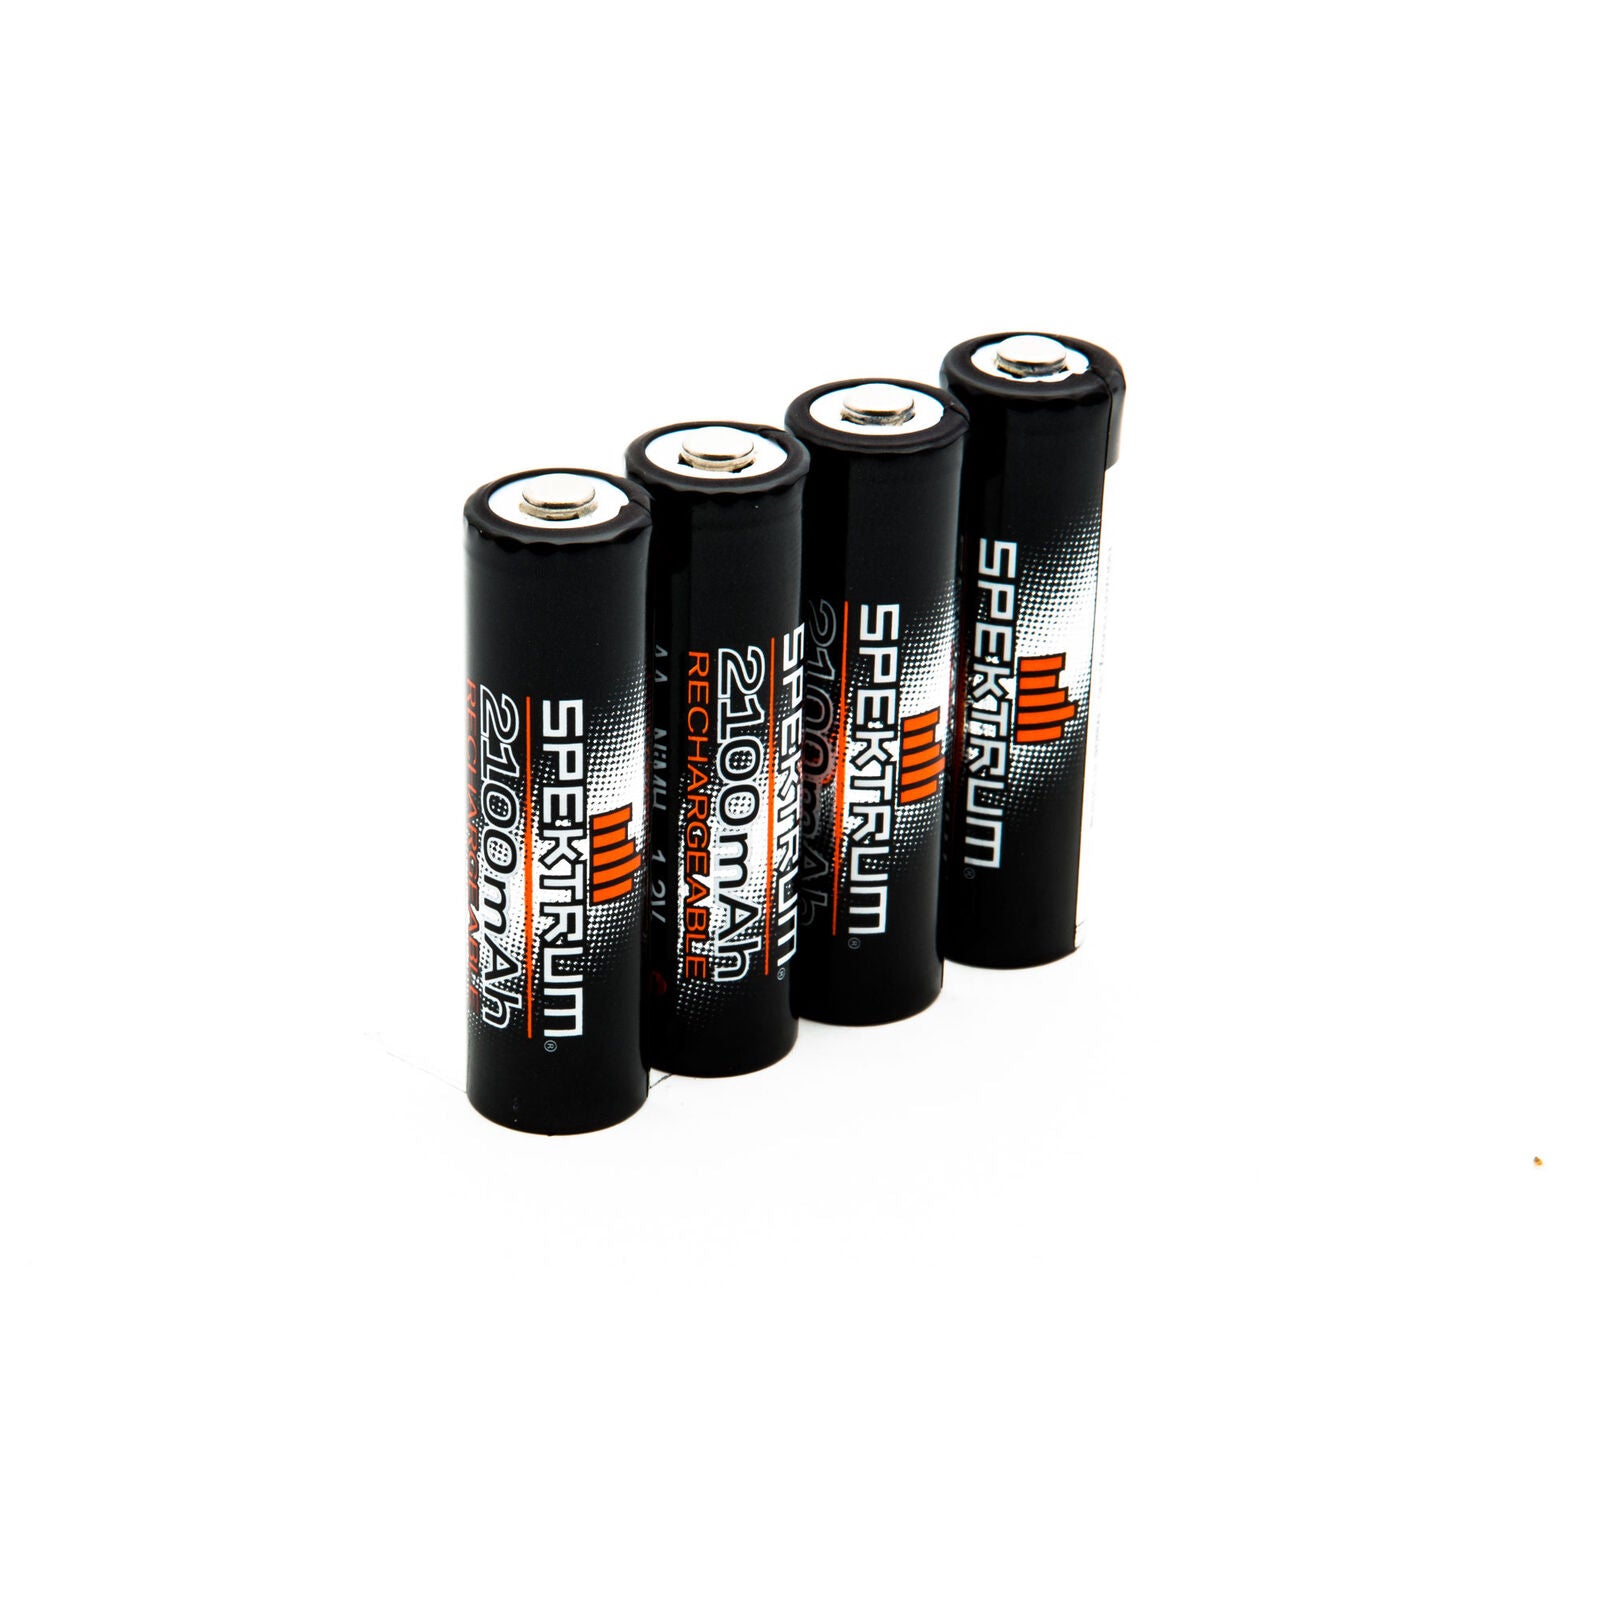 Baterías Spektrum RC 1.2V 2100mAh AA NiMH (4)